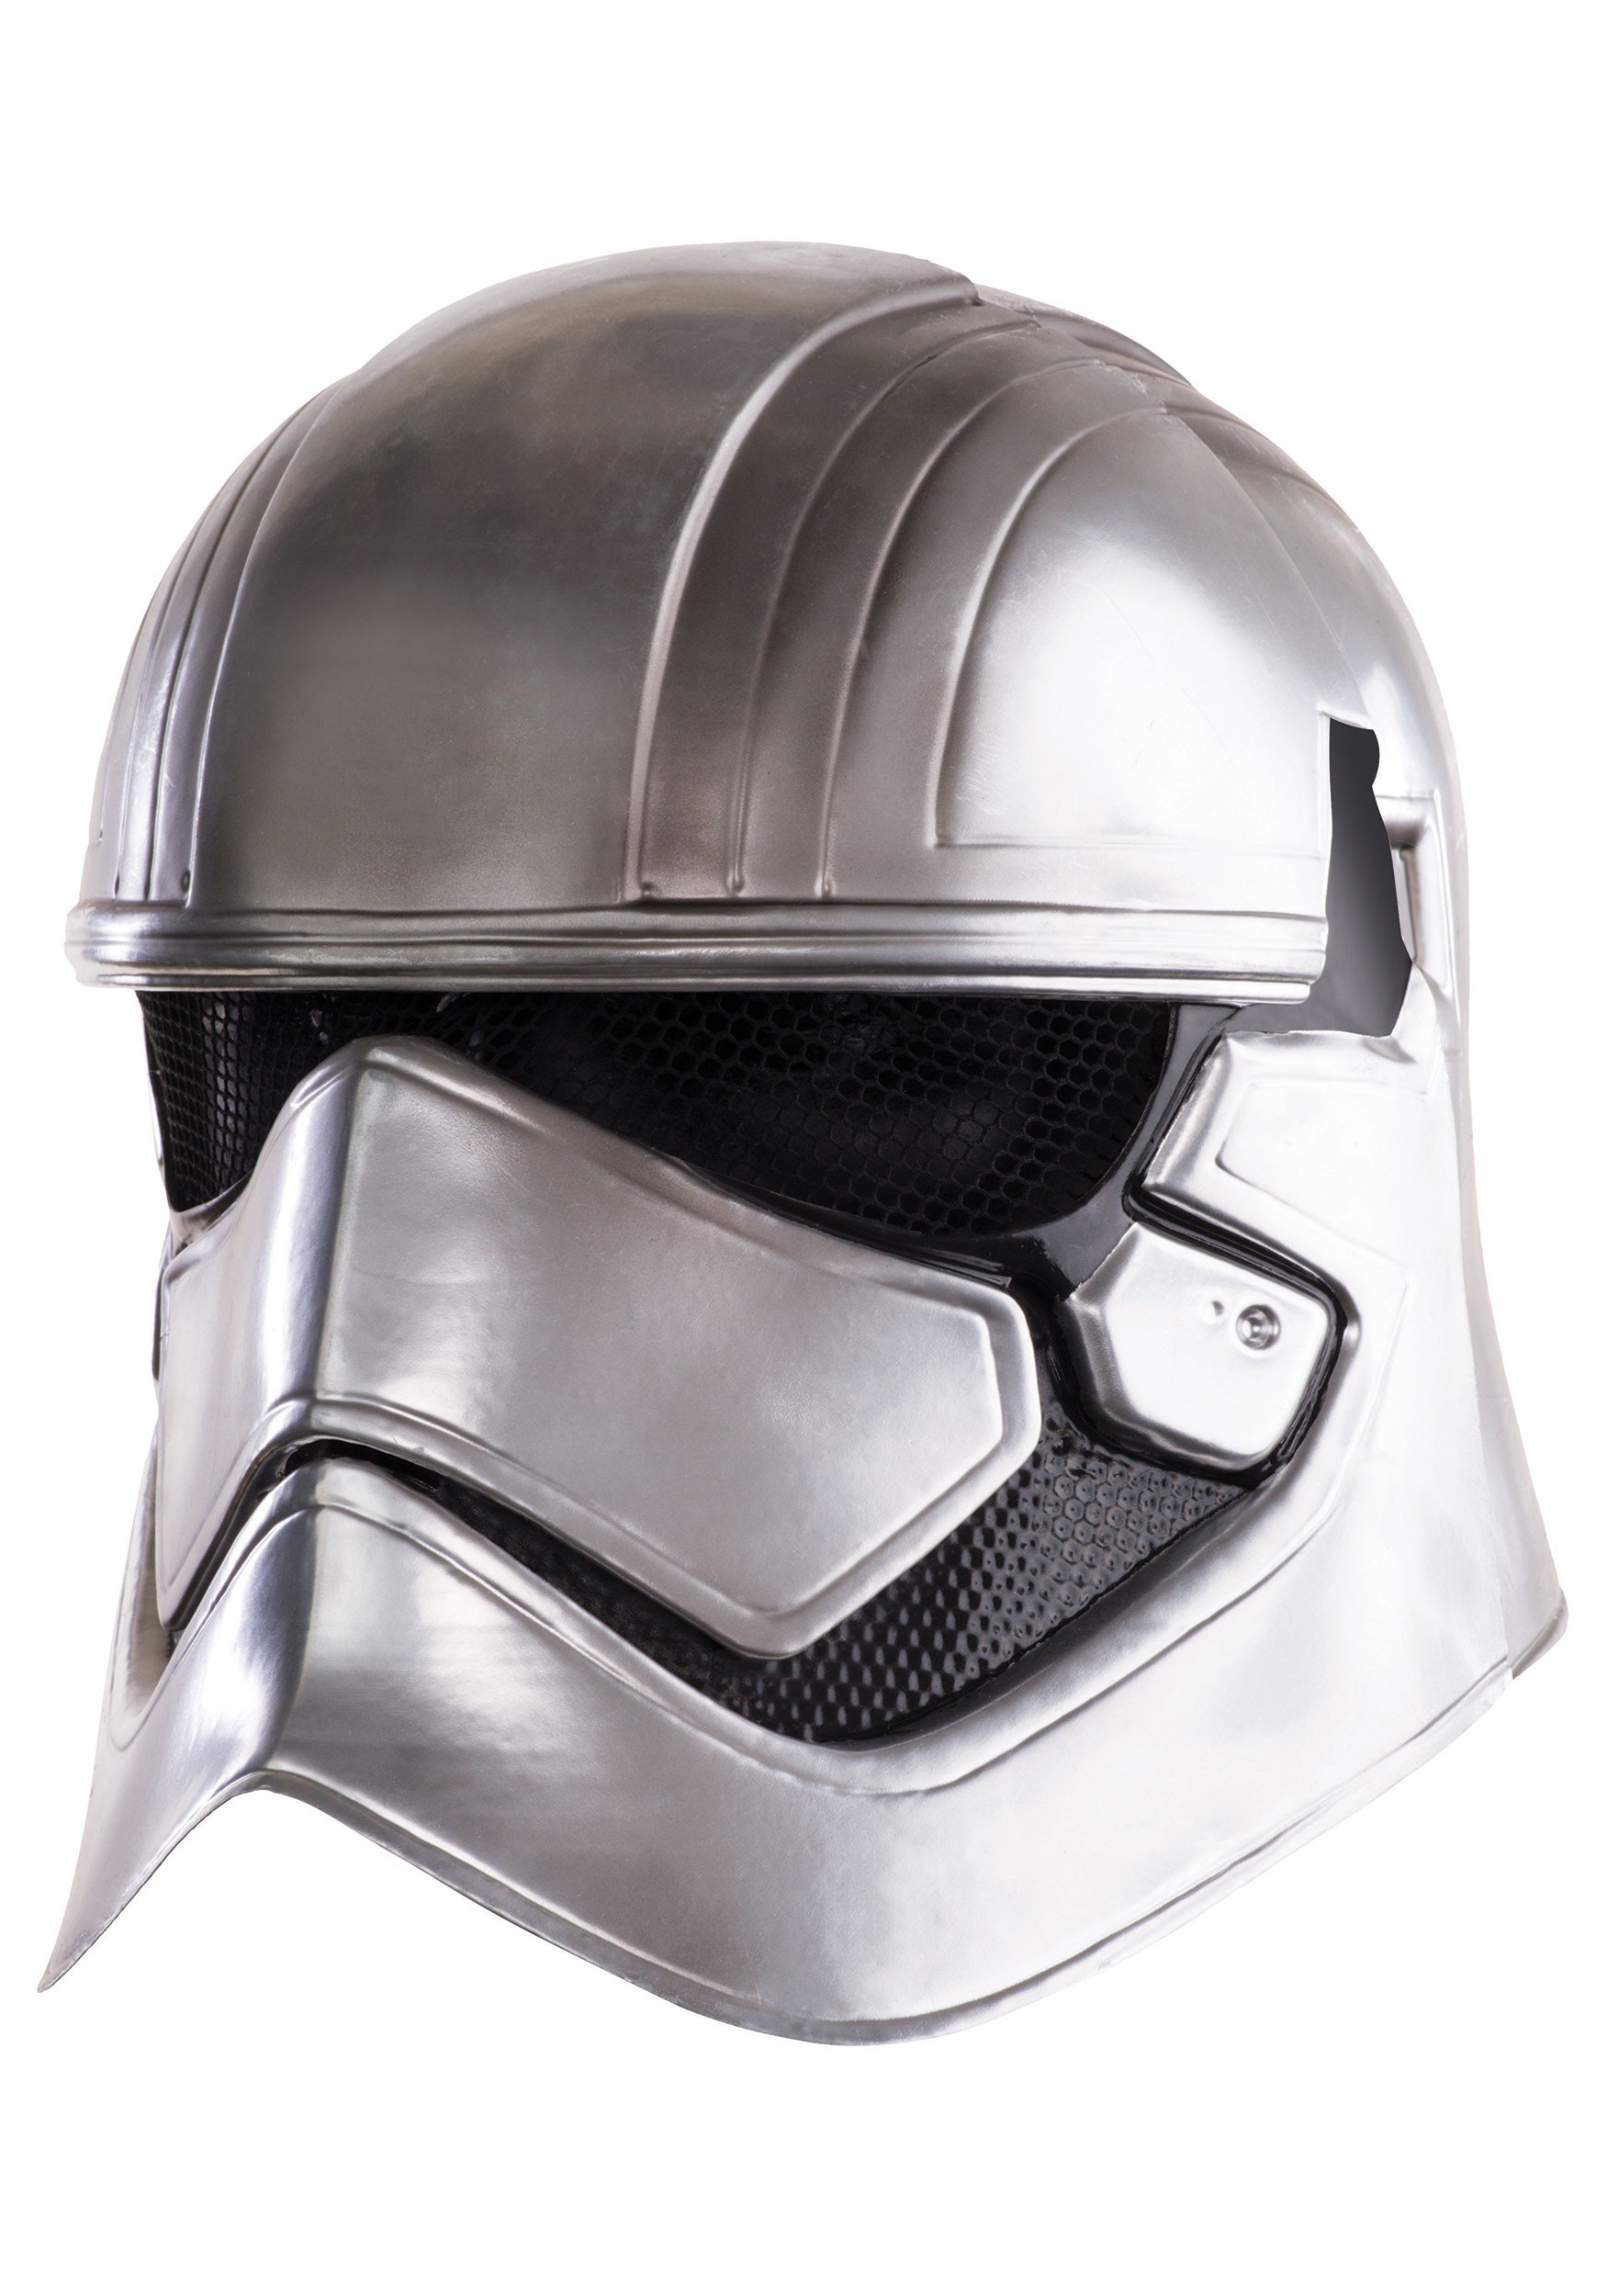 Star Wars The Force Awakens Deluxe Captain Phasma Adult Helmet